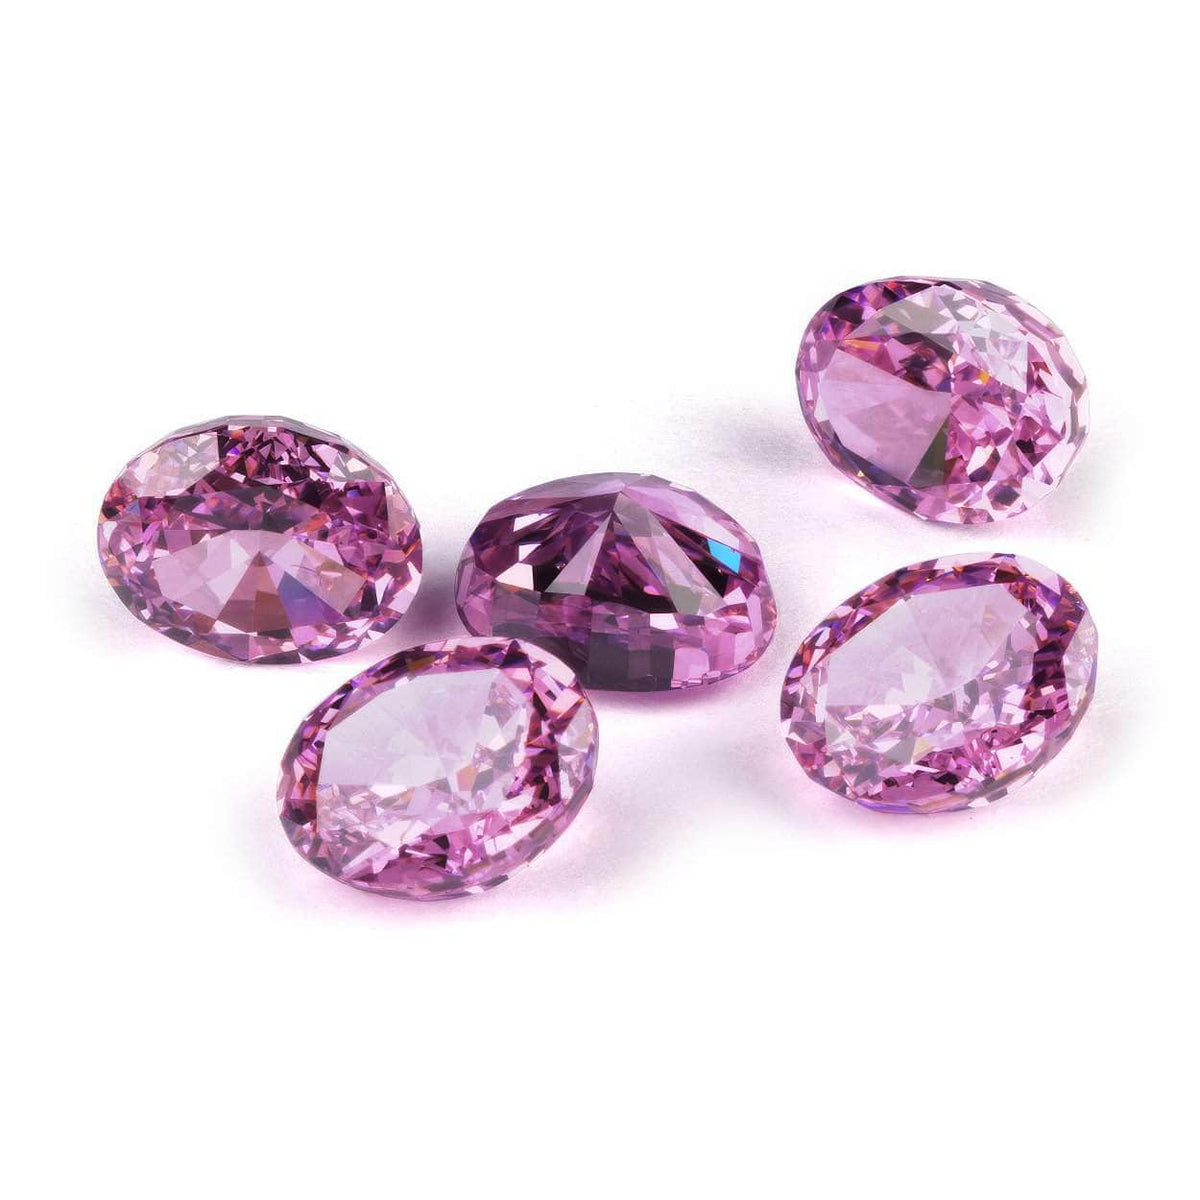 3 Set Of Purple Sapphire Oval-Cut Lab-Grown Diamond Gemstone 3*5mm / Purple Sapphire / Oval